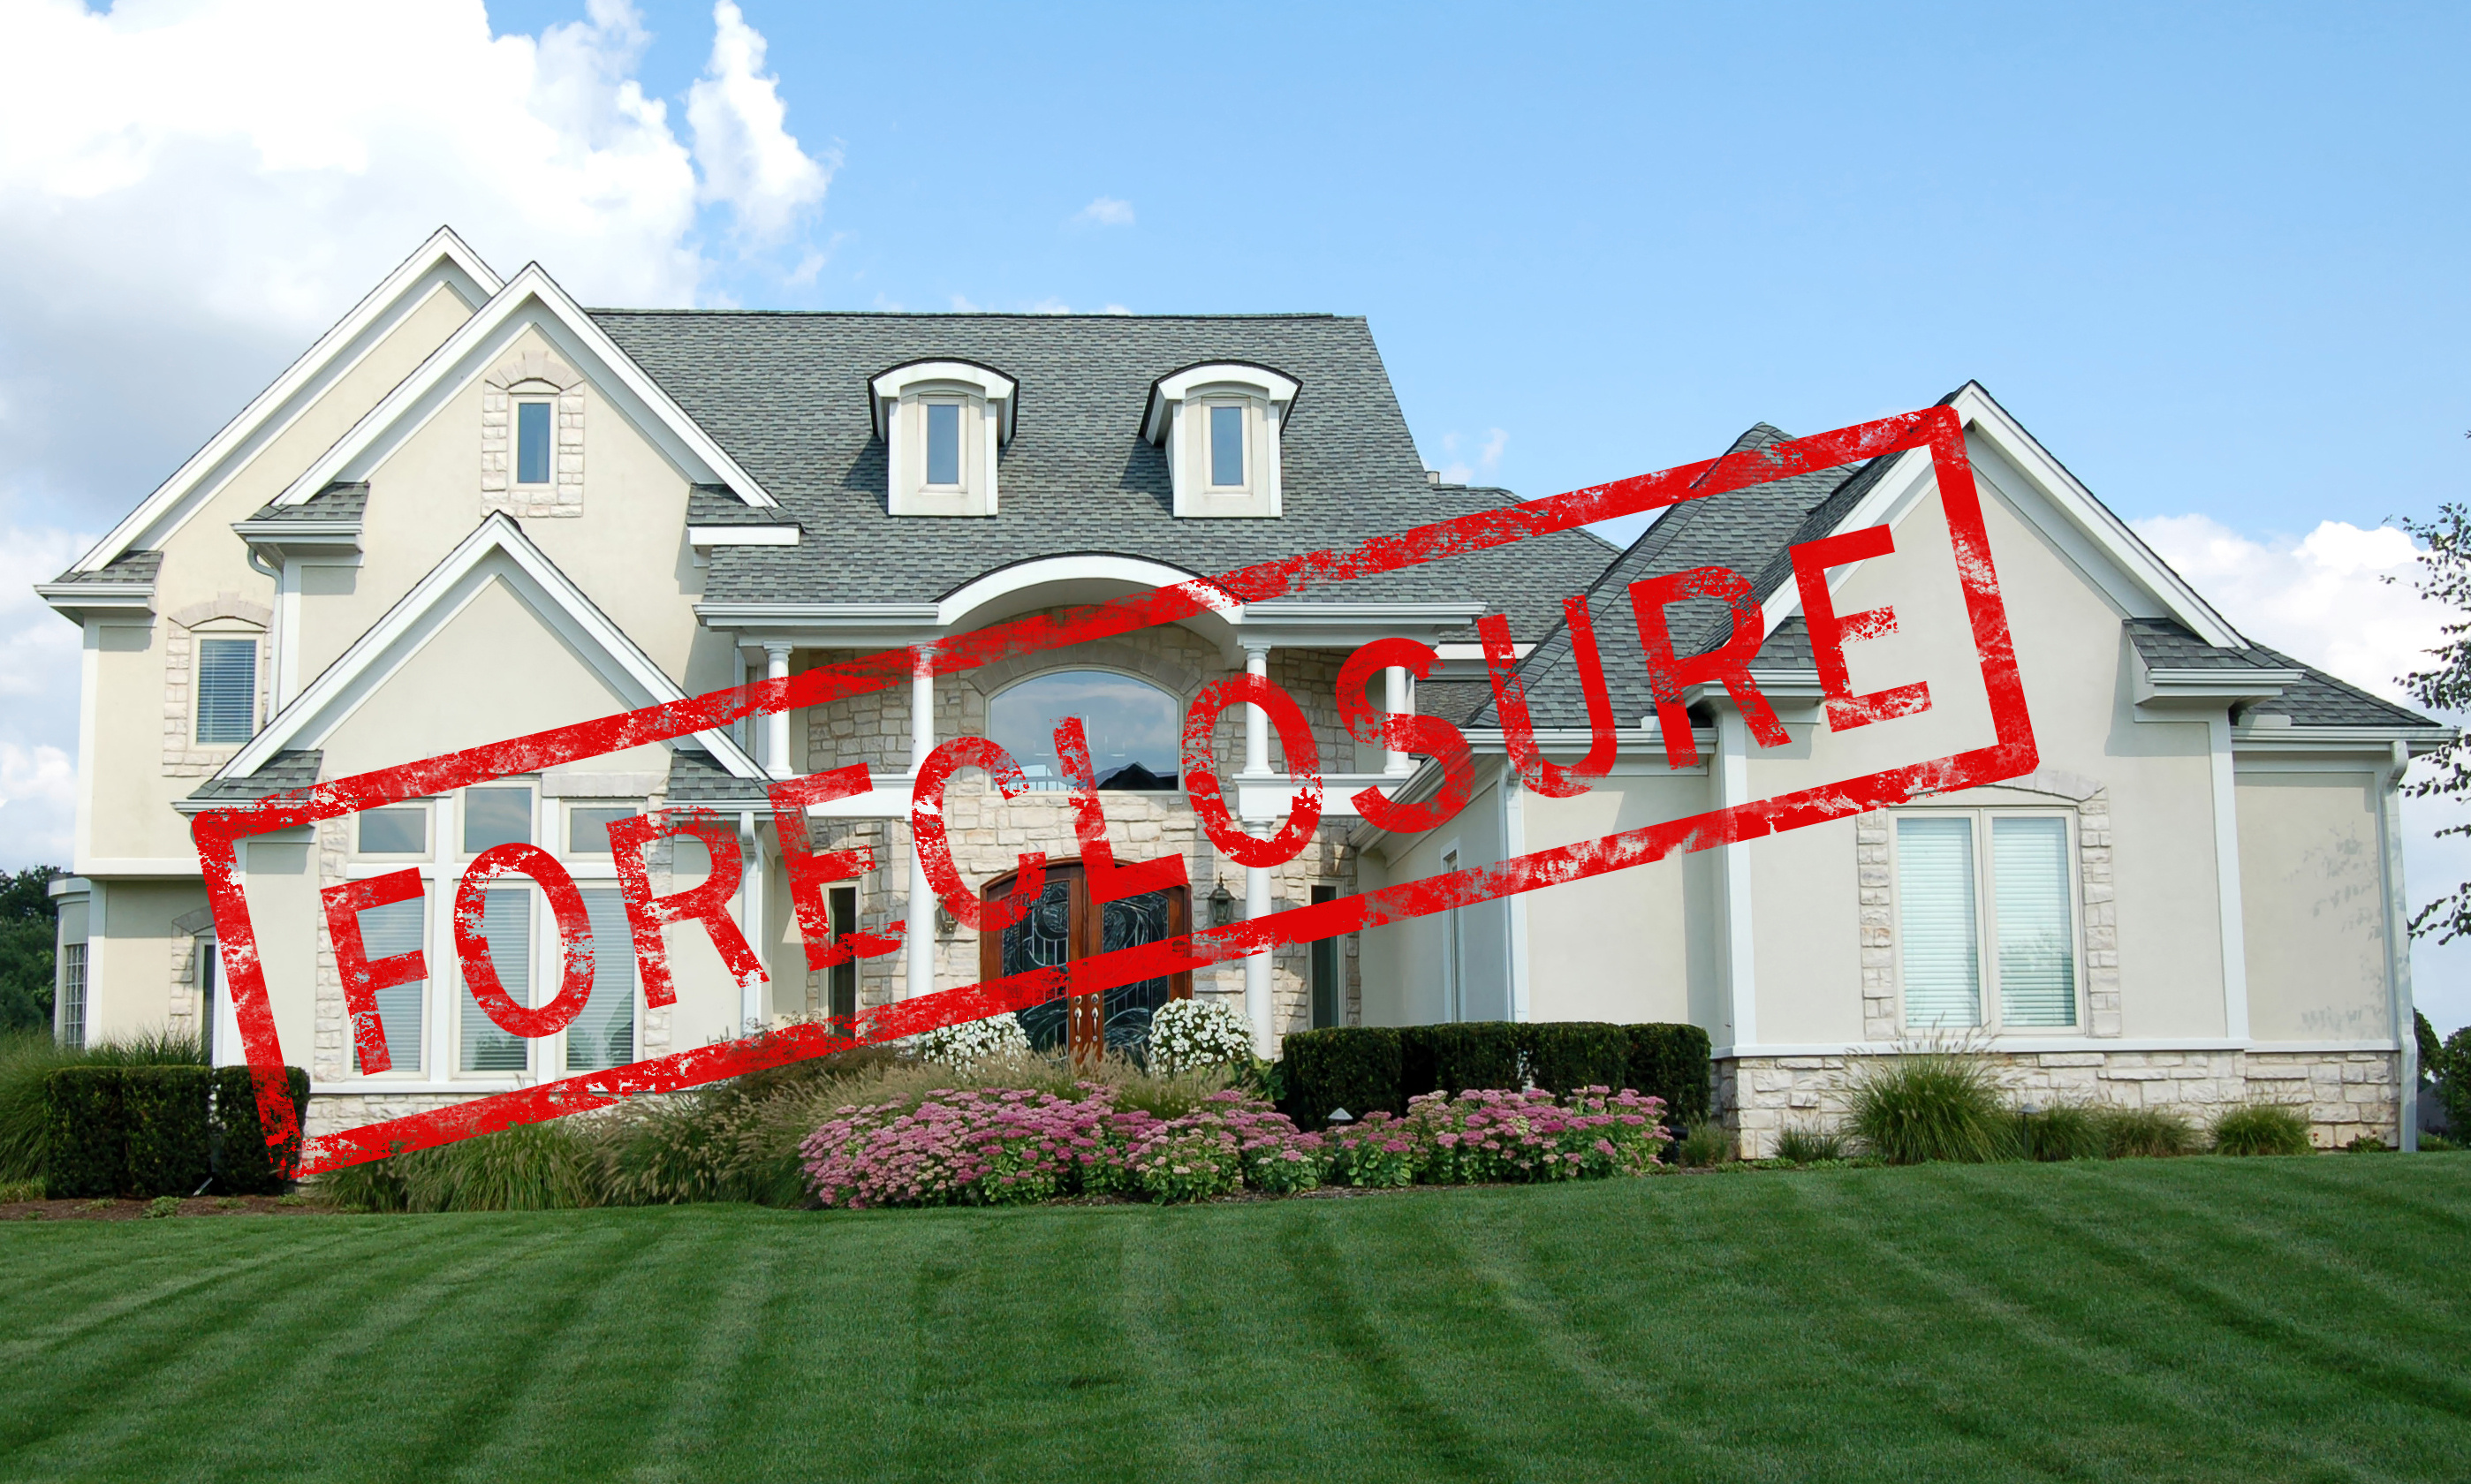 Call Brazos Valley Appraisals when you need appraisals regarding Brazos foreclosures